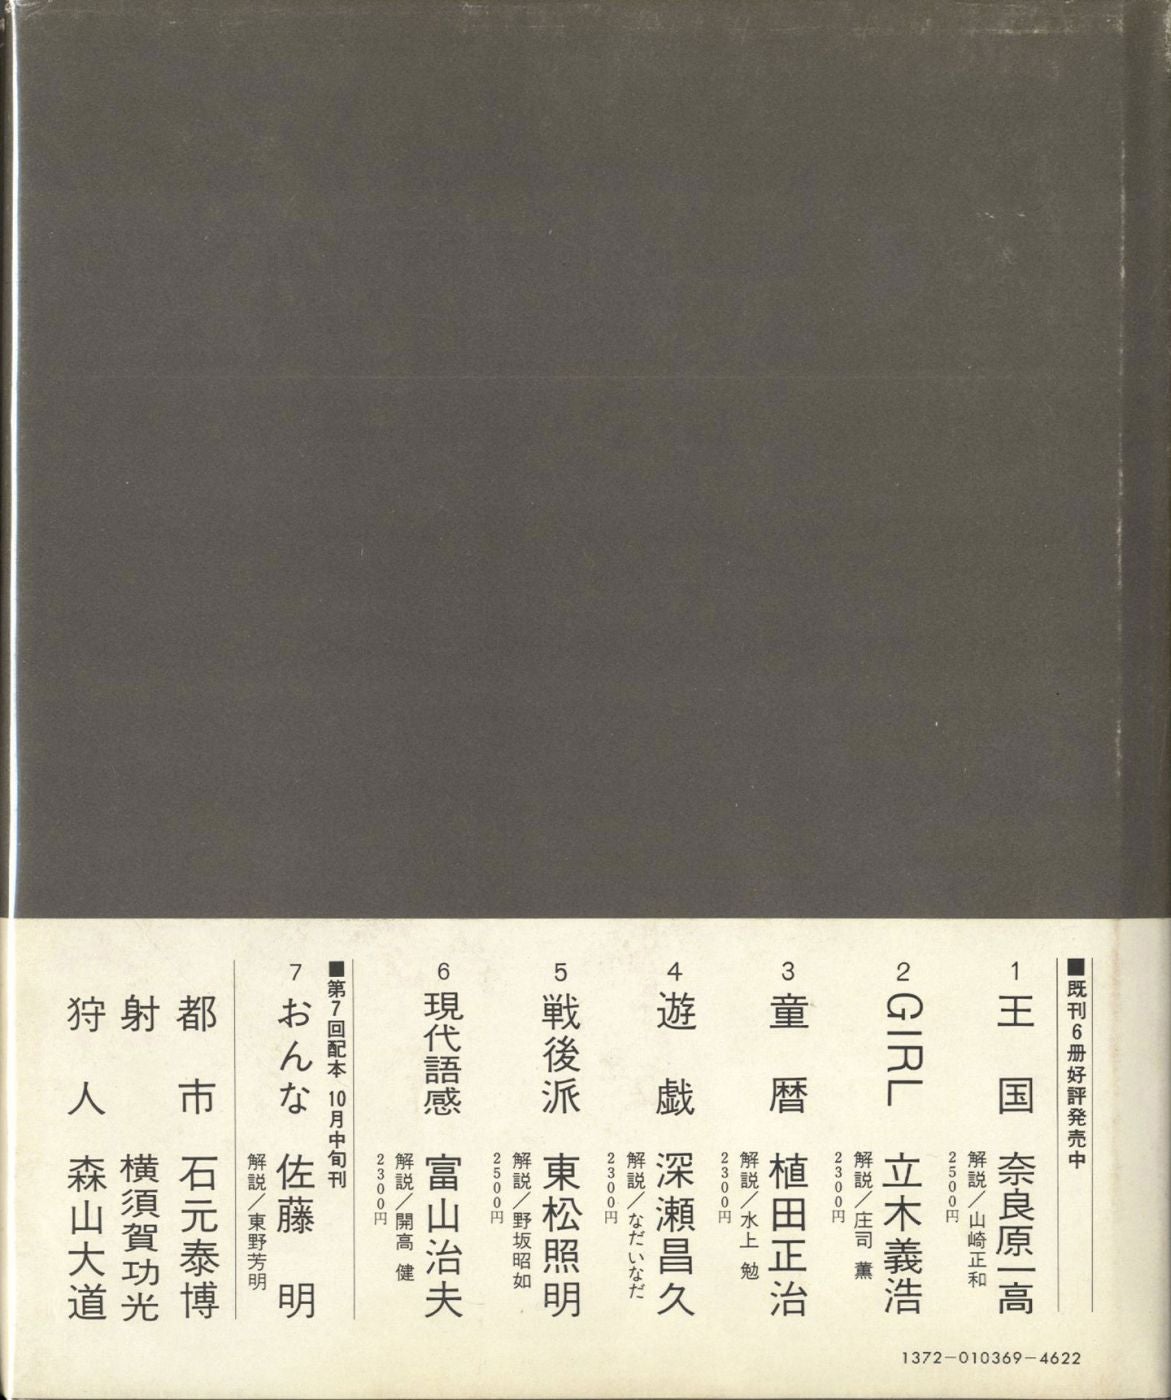 Gendai Gokan (Popular Life Today) (Eizo no Gendai vol. 6)